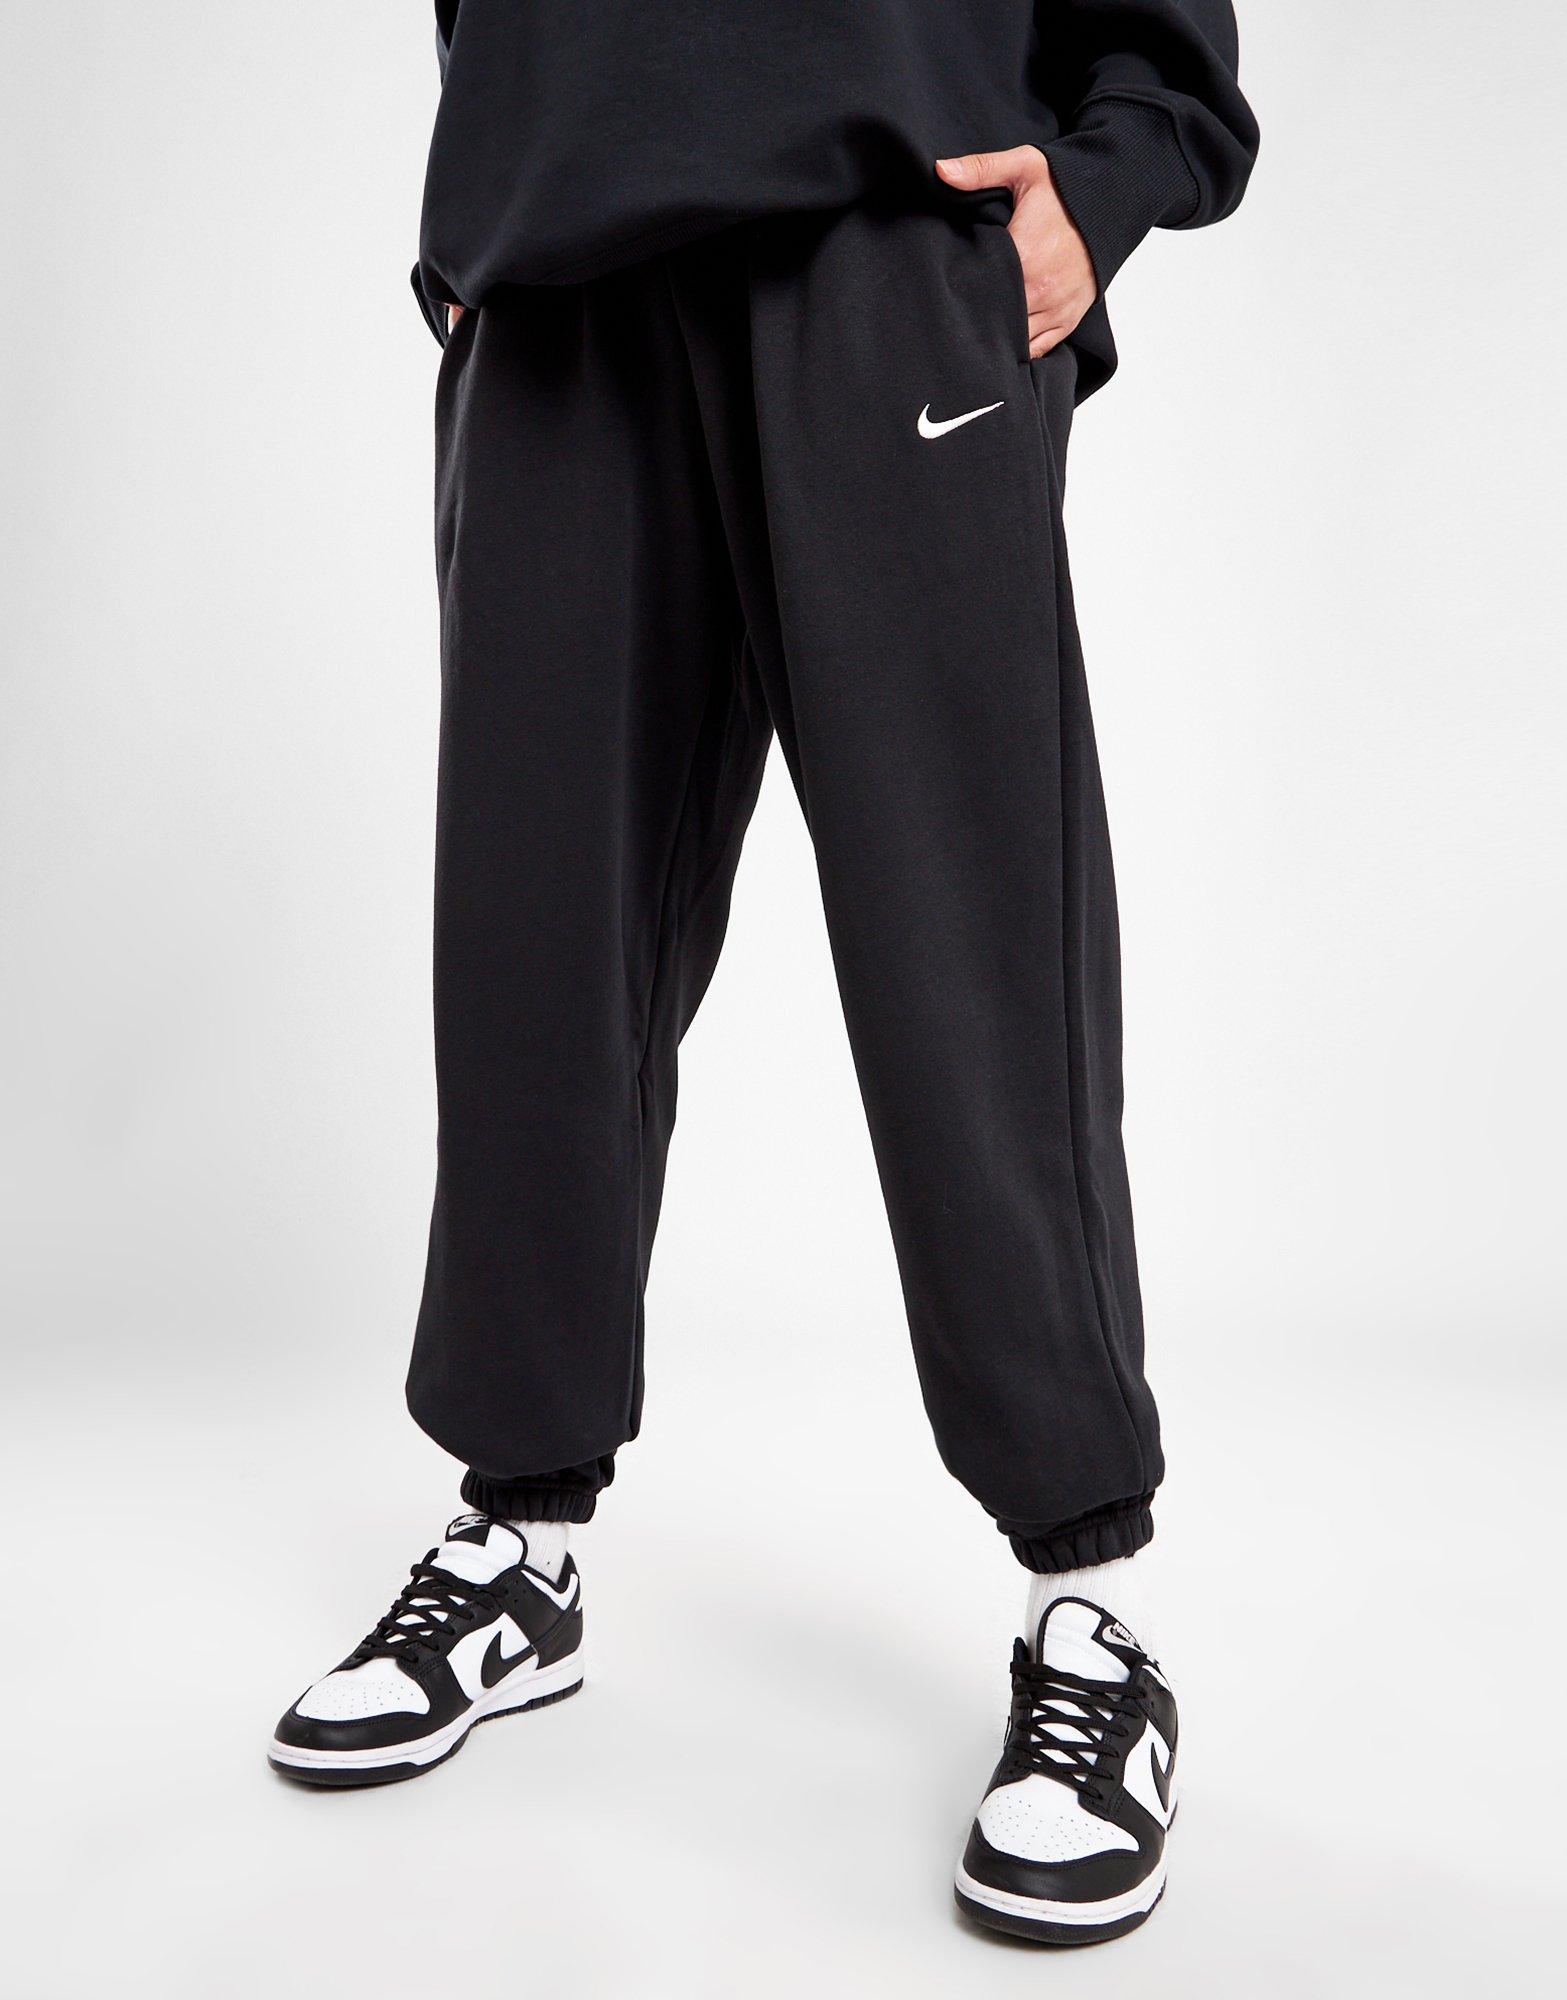 Women's oversized high-waisted jogging suit Nike Phoenix Fleece - Nike -  Training Pants - Teamwear